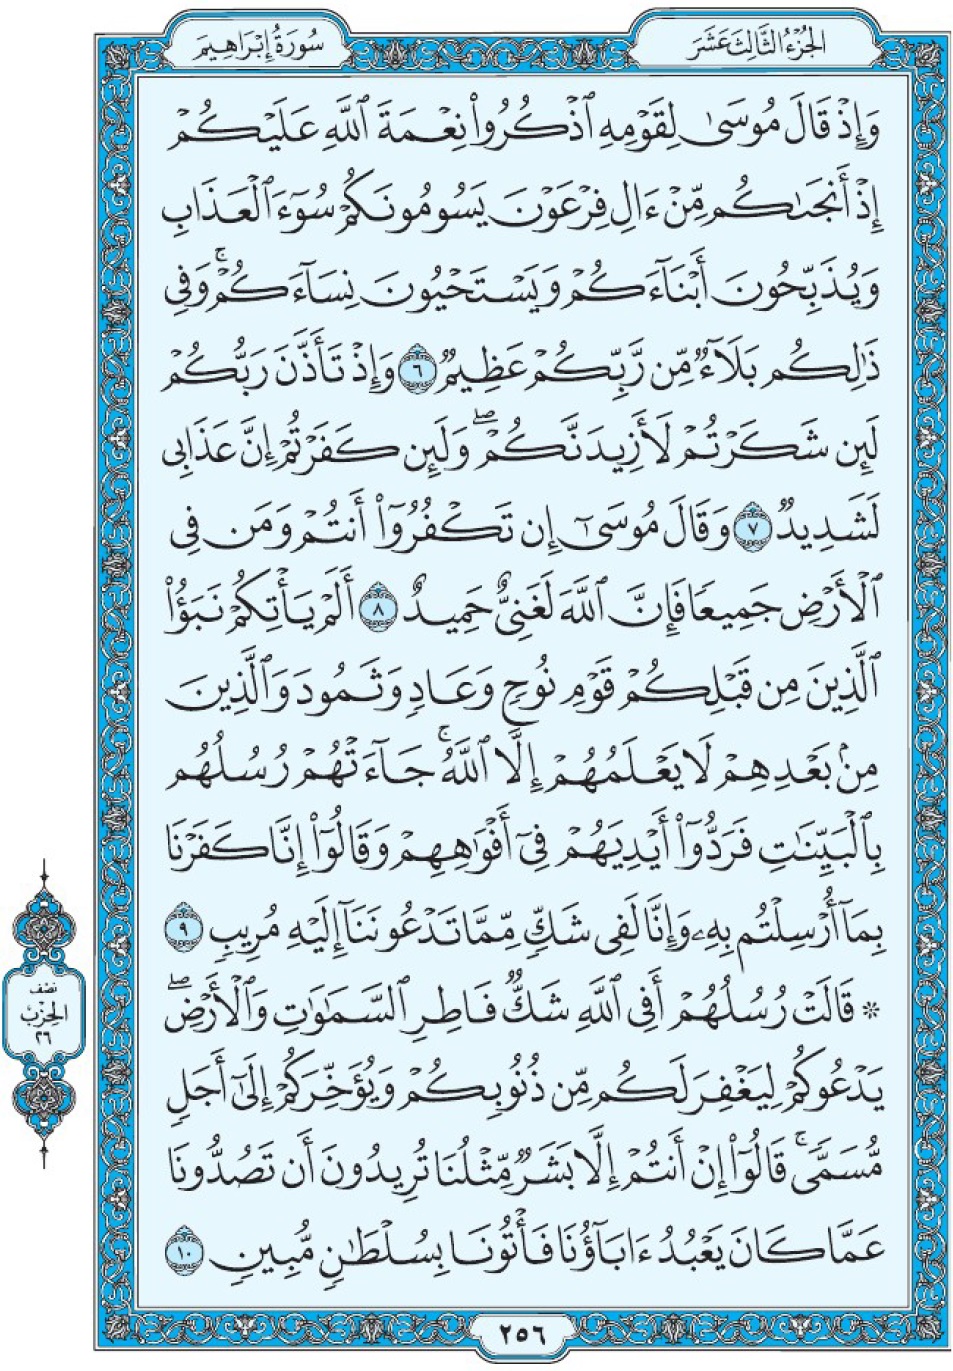 Коран Мединский мусхаф страница 256, Ибрахим, аят 6-10